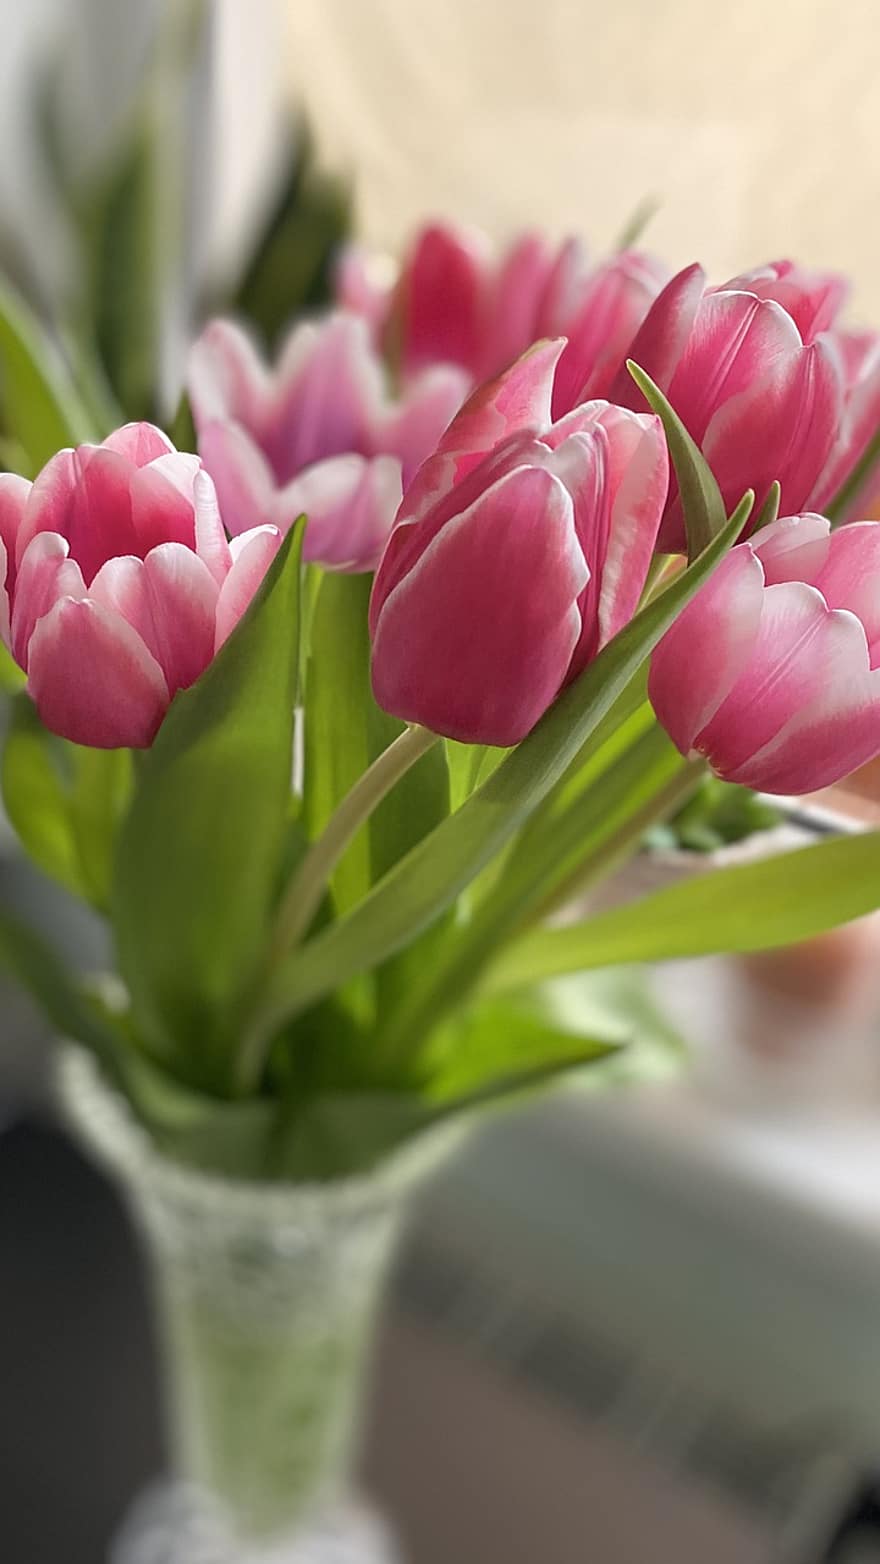 тюльпаны, розовые тюльпаны, букет, розовые цветы, цветы, тюльпан, цветок, завод, ваза, головка цветка, свежесть